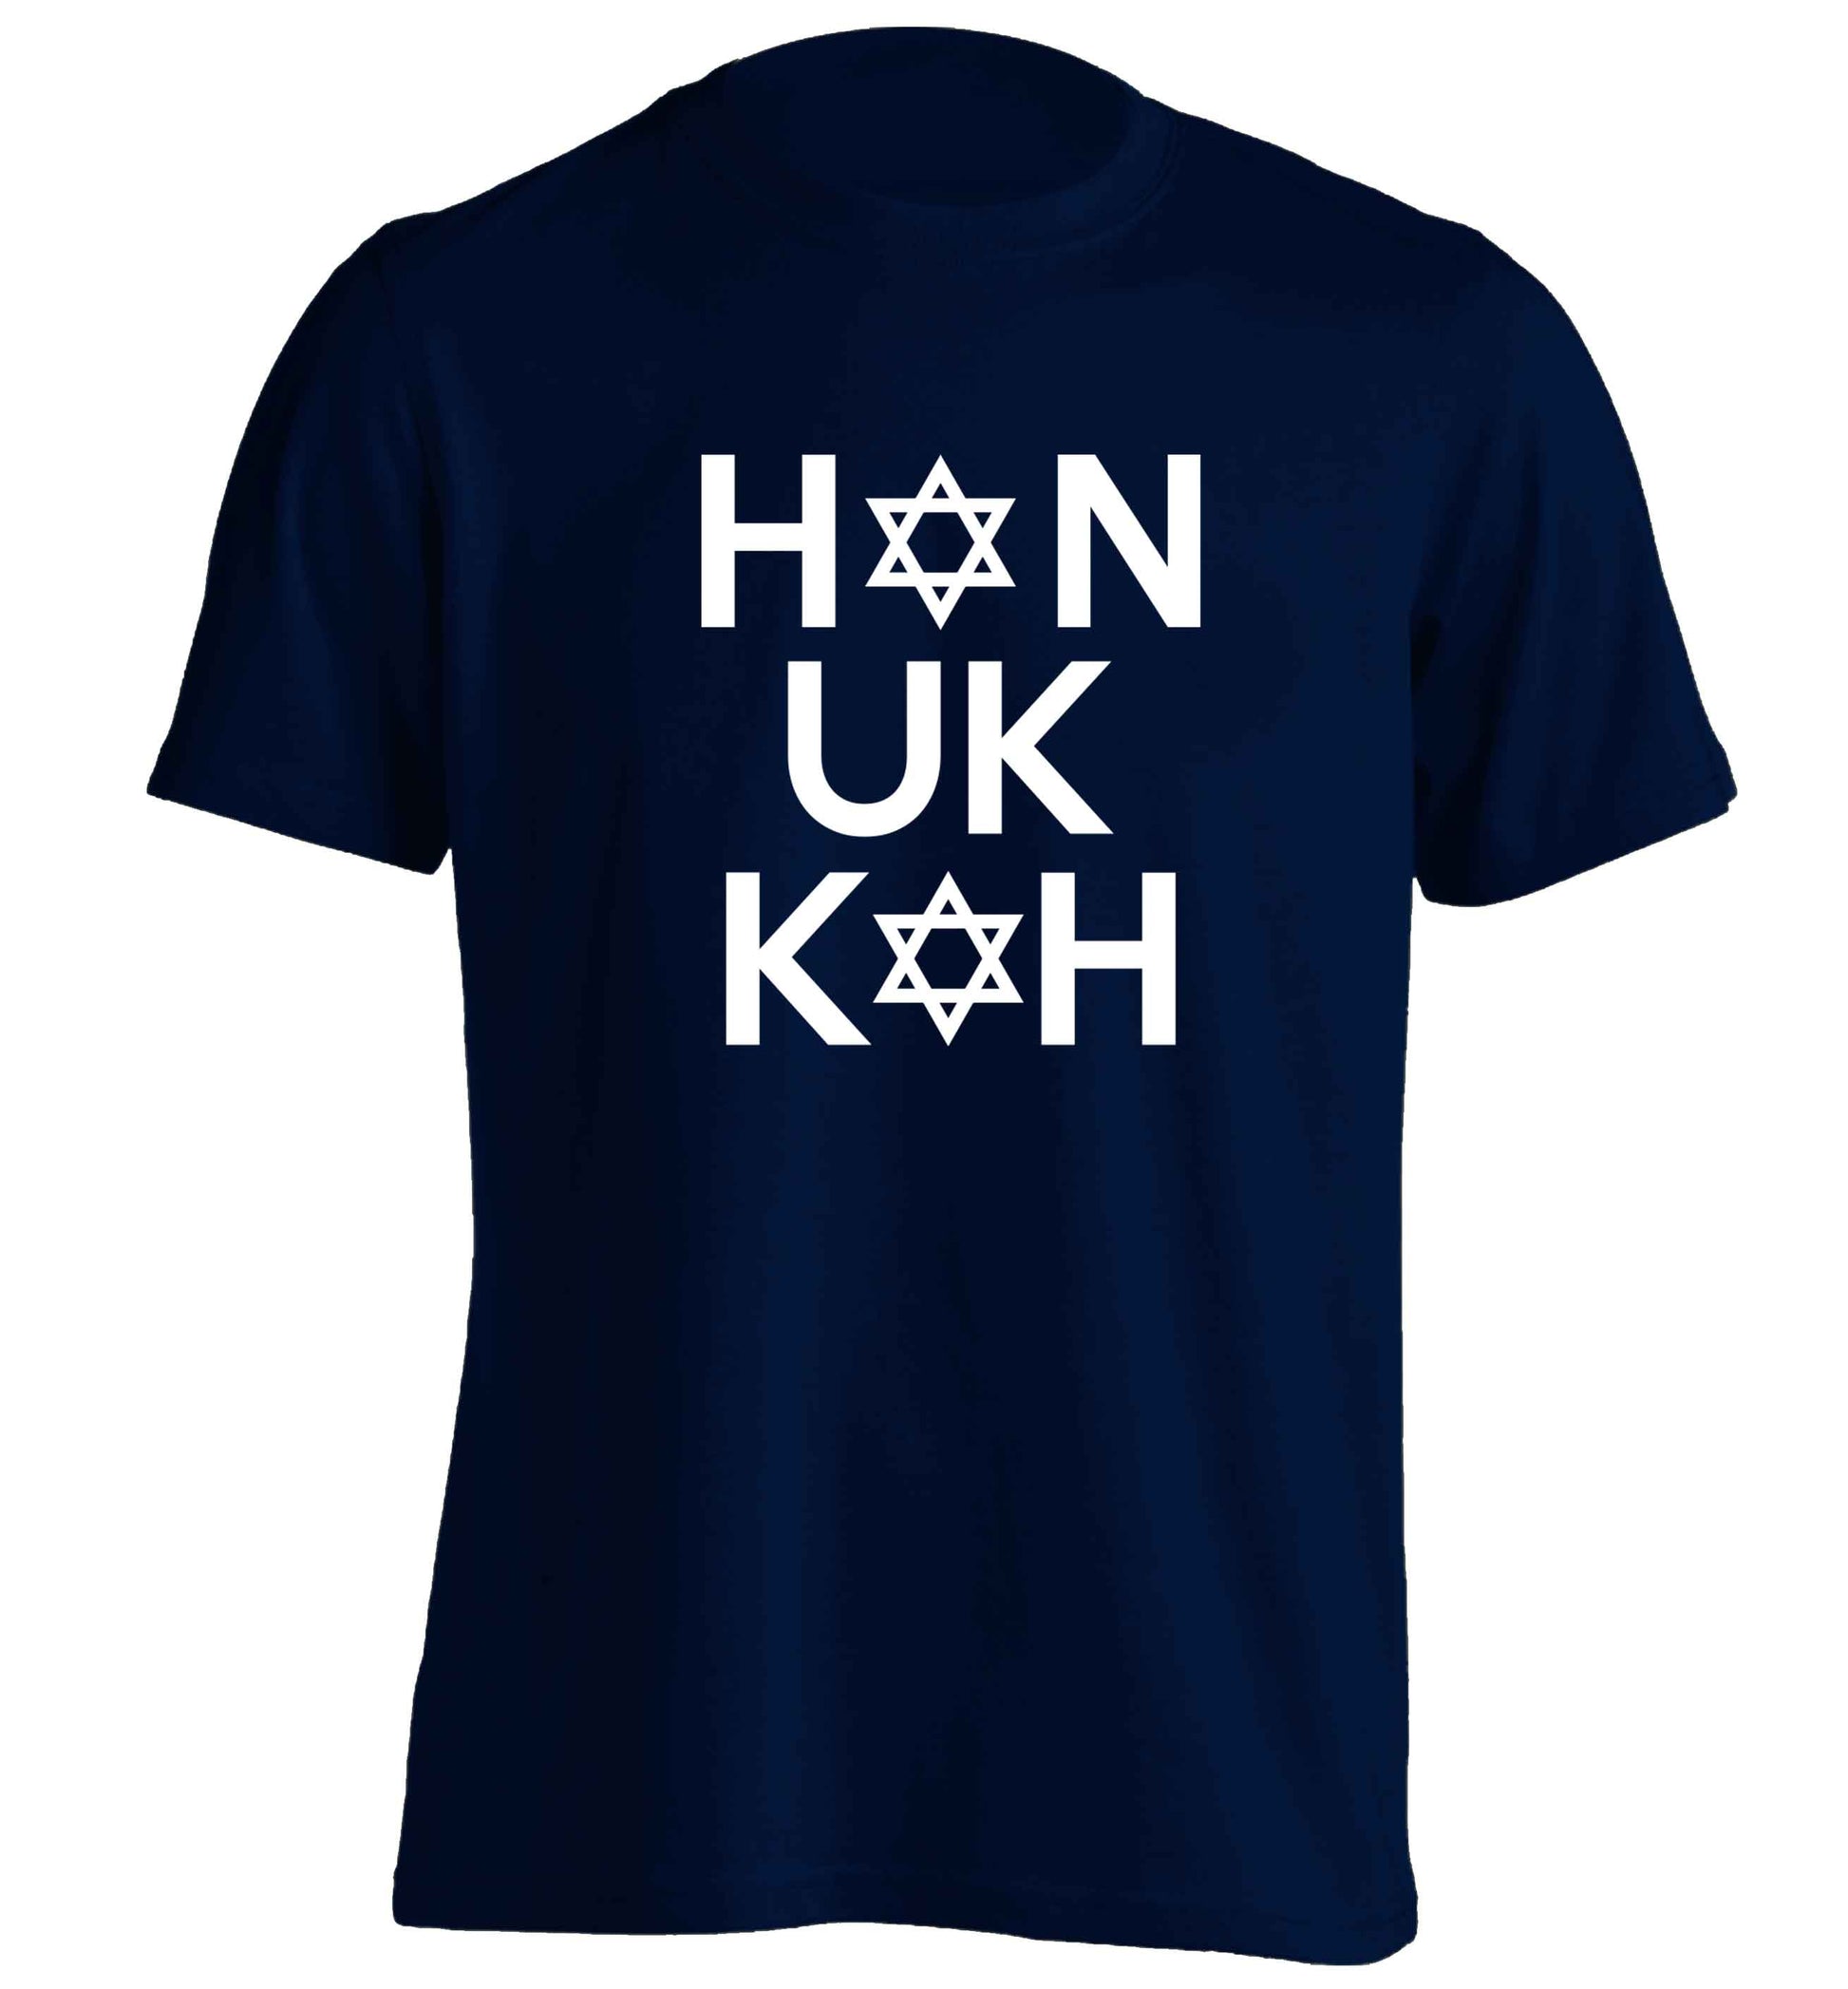 Han uk kah  Hanukkah star of david adults unisex navy Tshirt 2XL